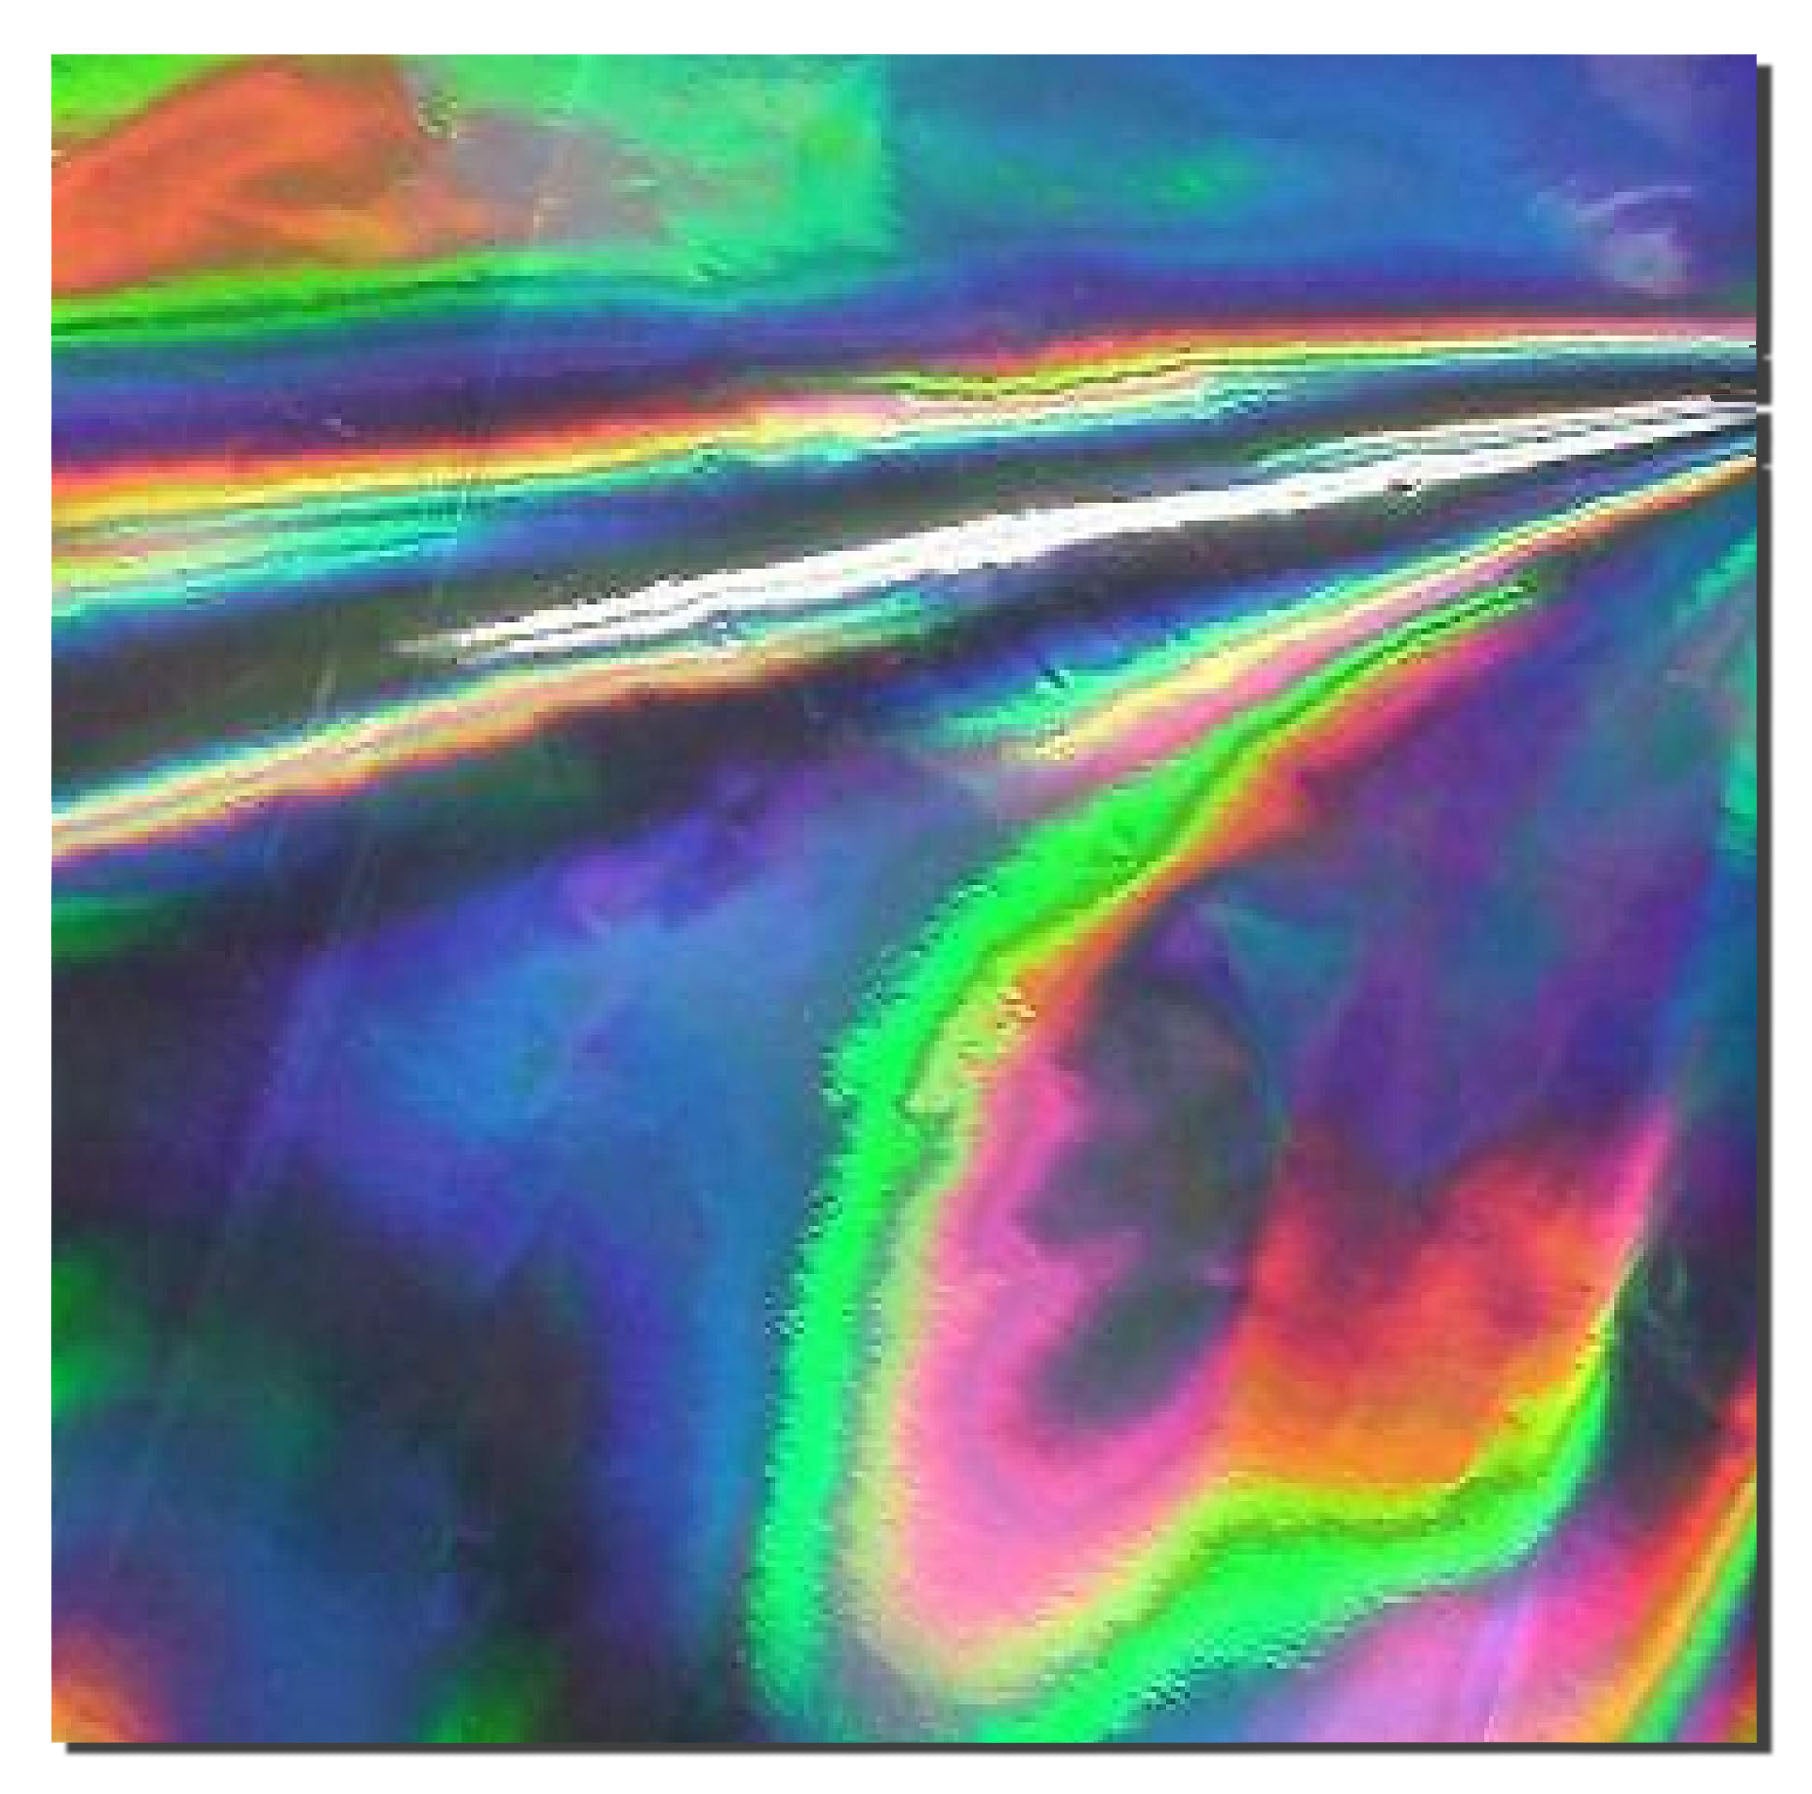 Oil Slick Rainbow Holographic Vinyl Rolls, Free Shipping for USA, Iridescent  Vinyl Tape Shimmer 